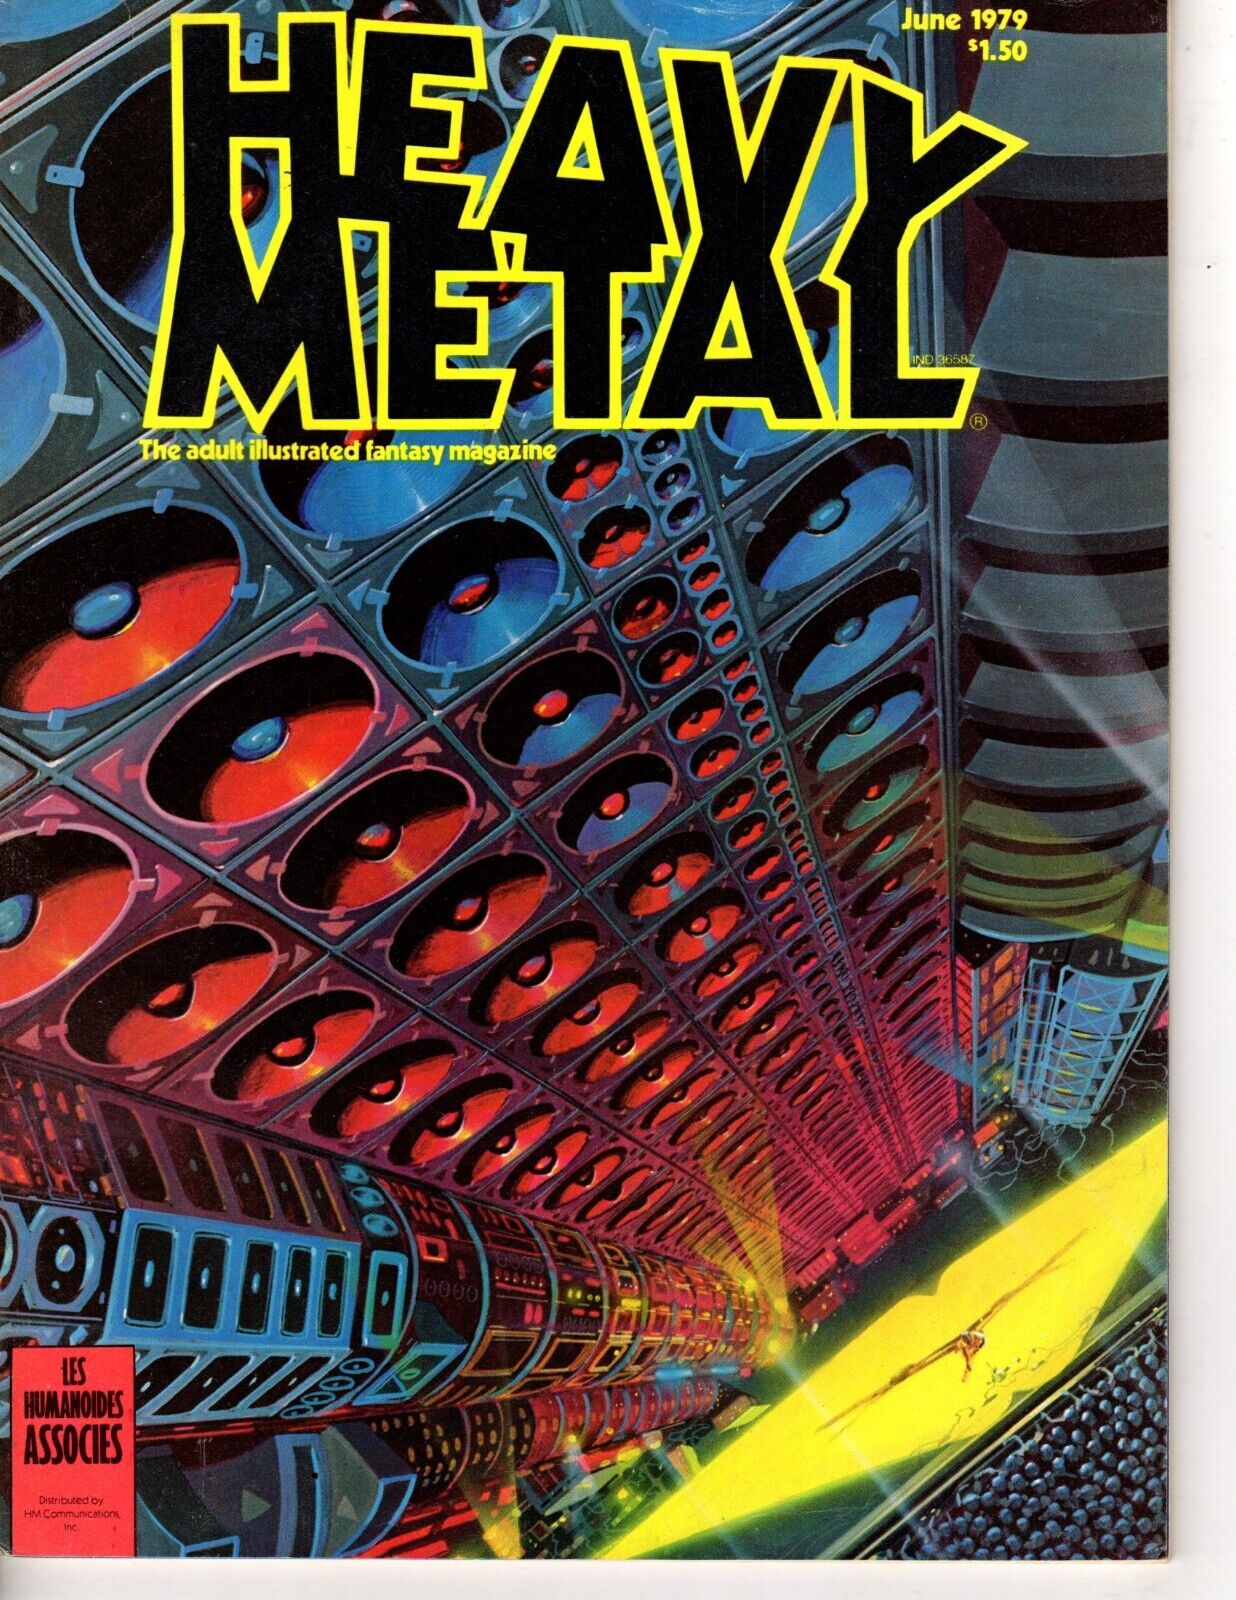 Heavy Metal Vol. 3, # 2 (VF 8.0) June 1979.